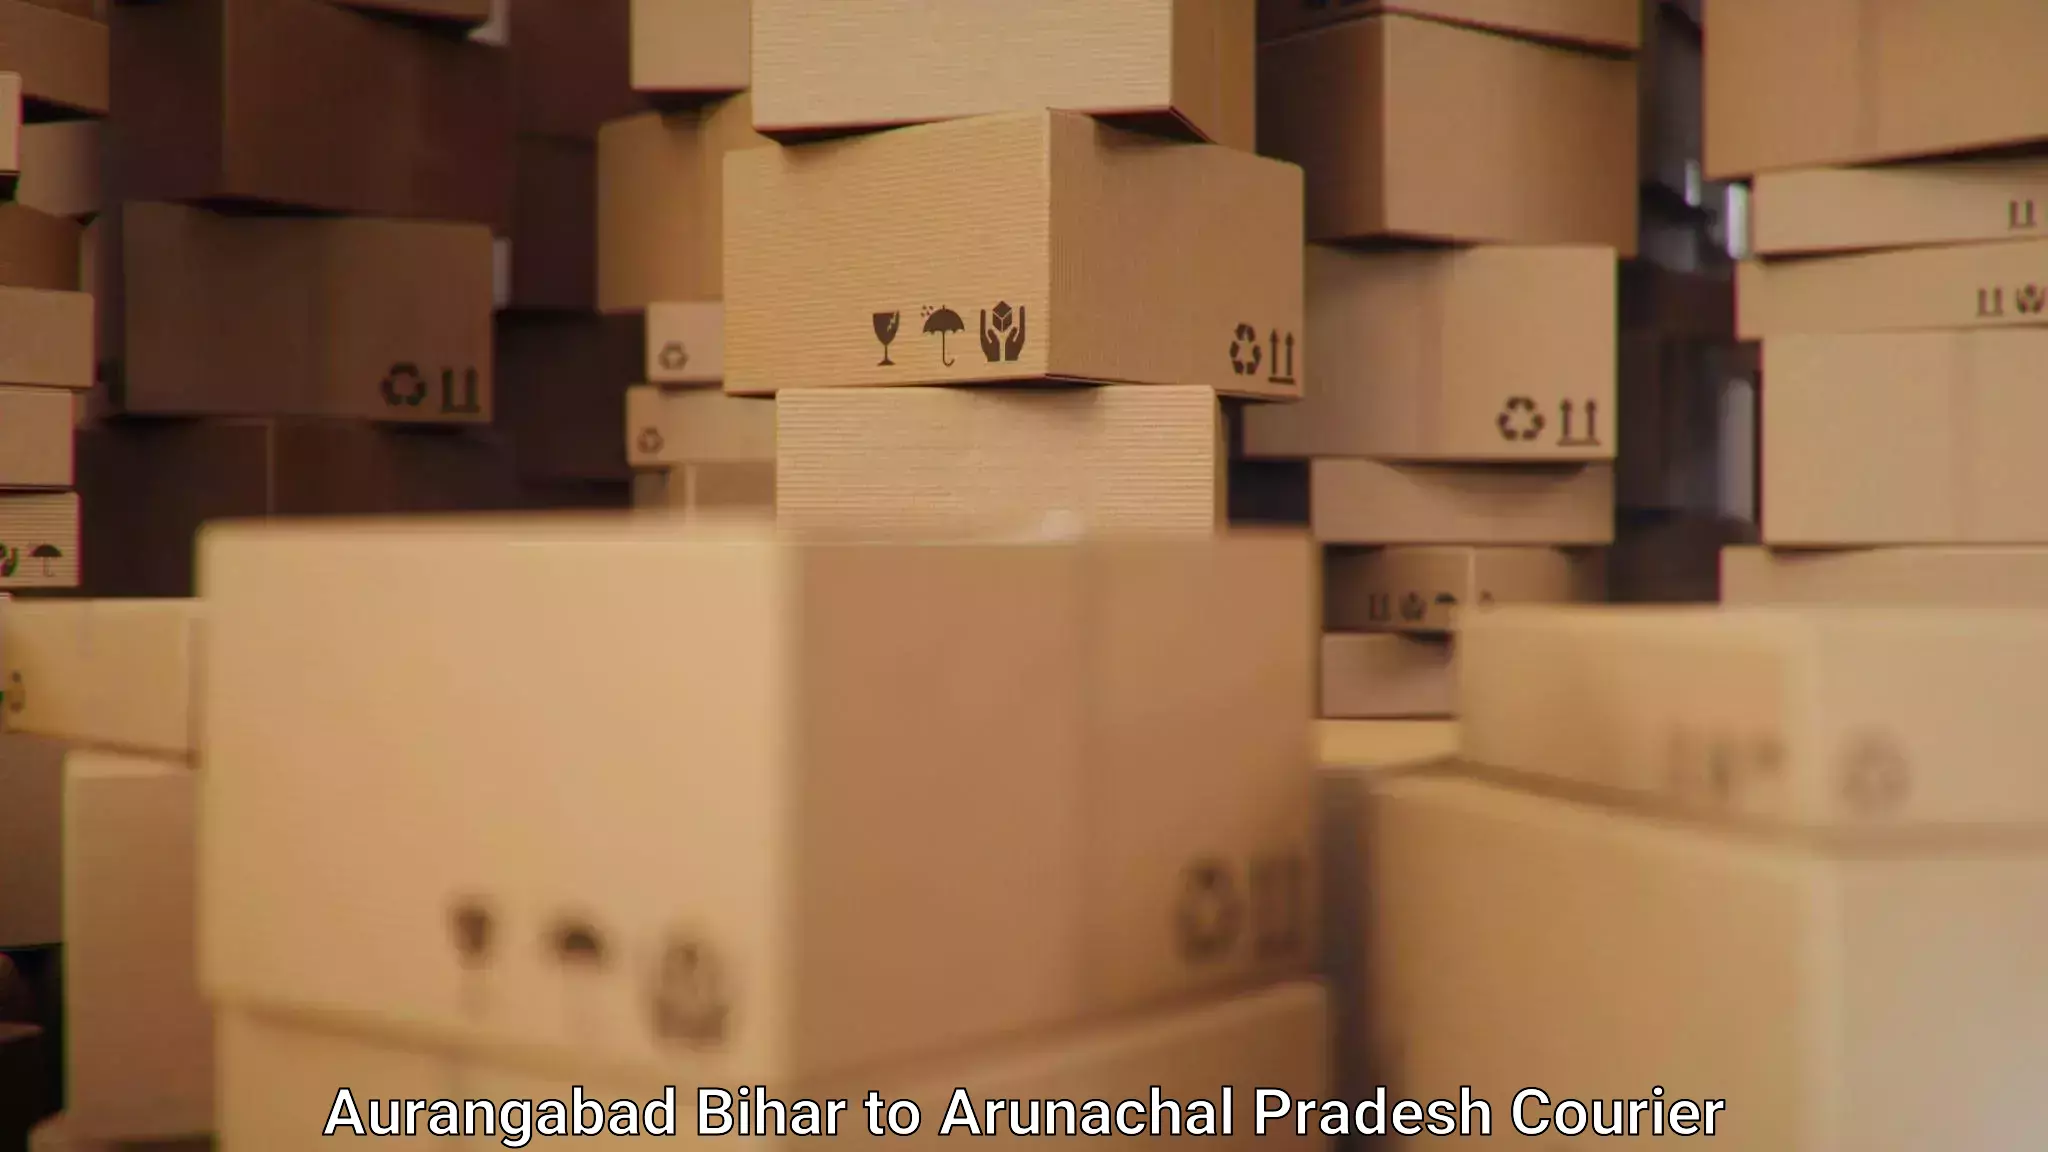 Premium courier solutions Aurangabad Bihar to Itanagar